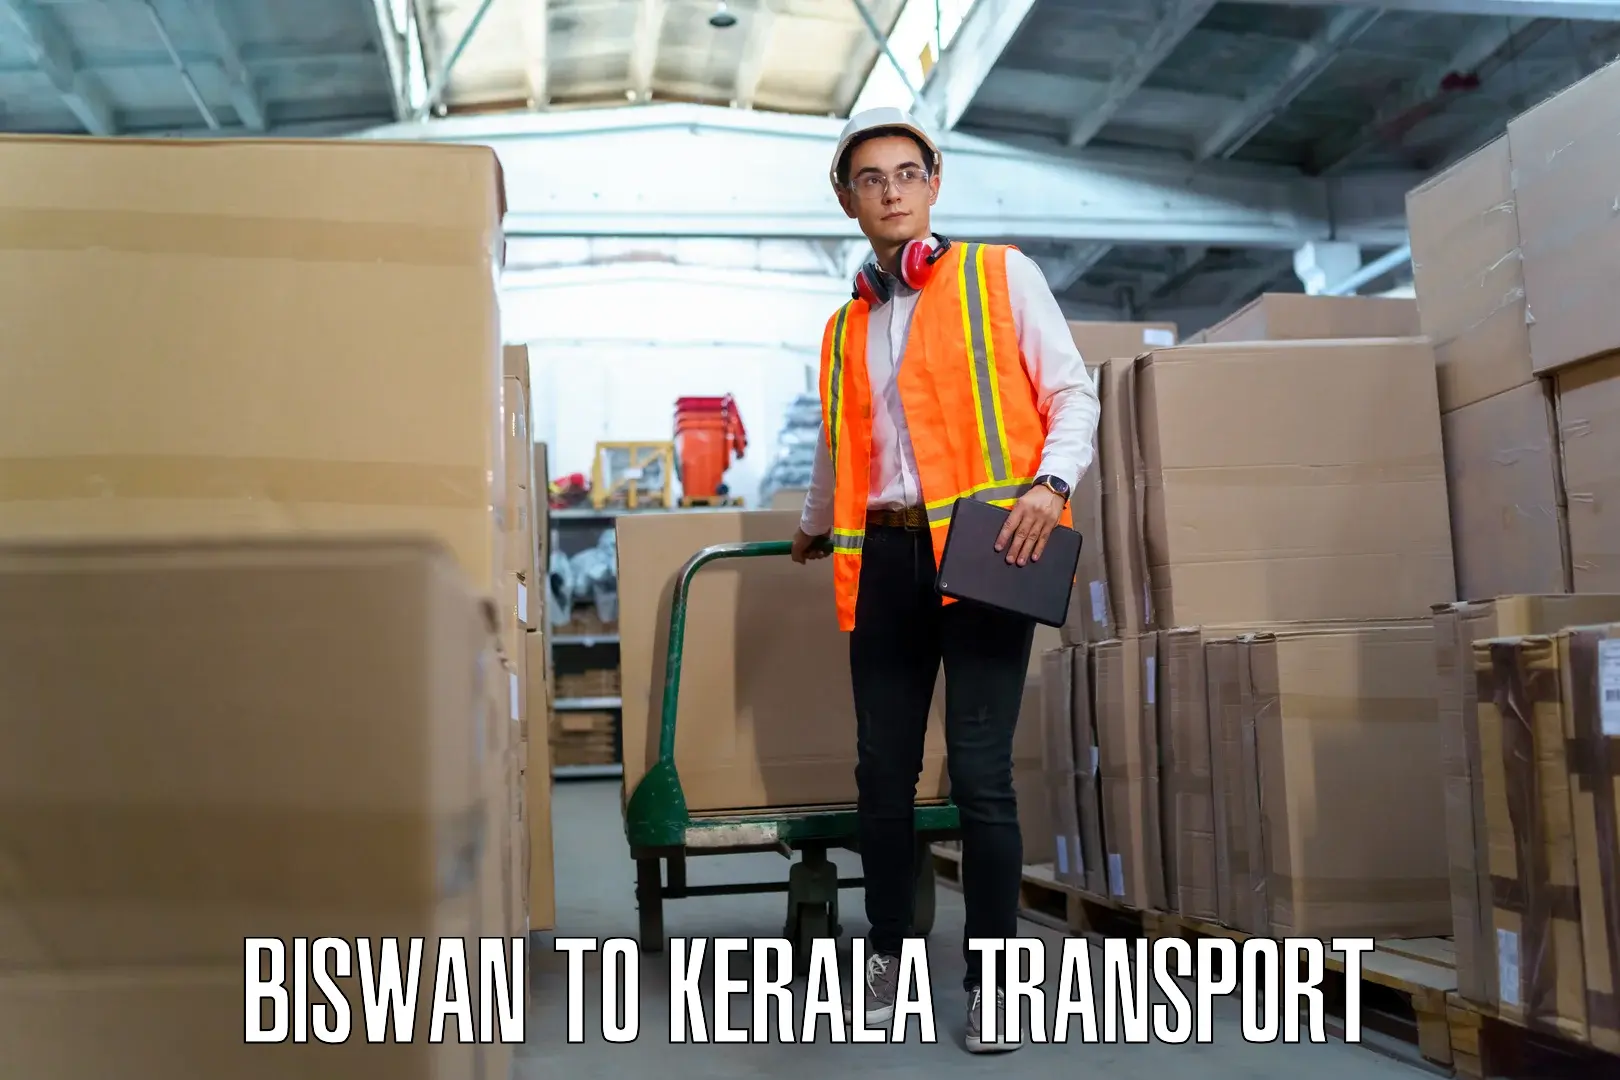 Transport in sharing in Biswan to Thiruvananthapuram